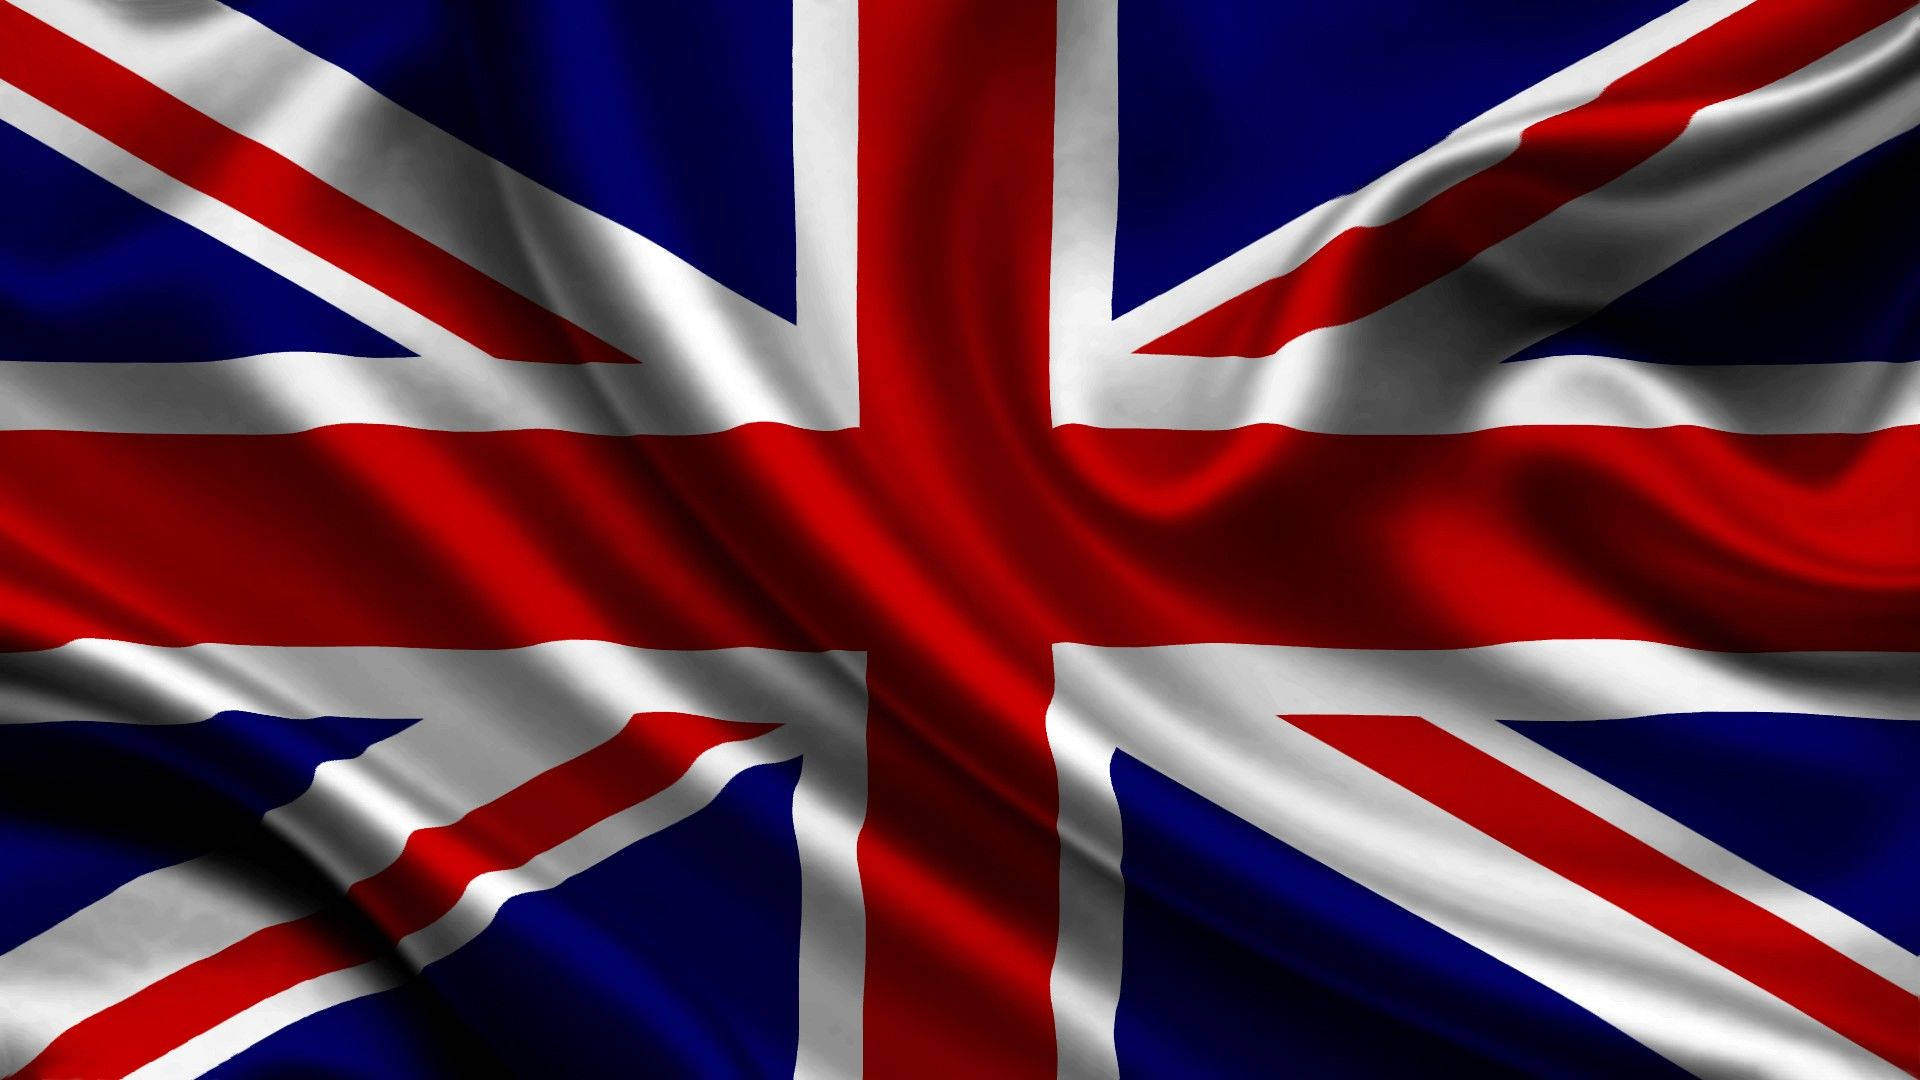 Majestic Display Of The United Kingdom Flag Background